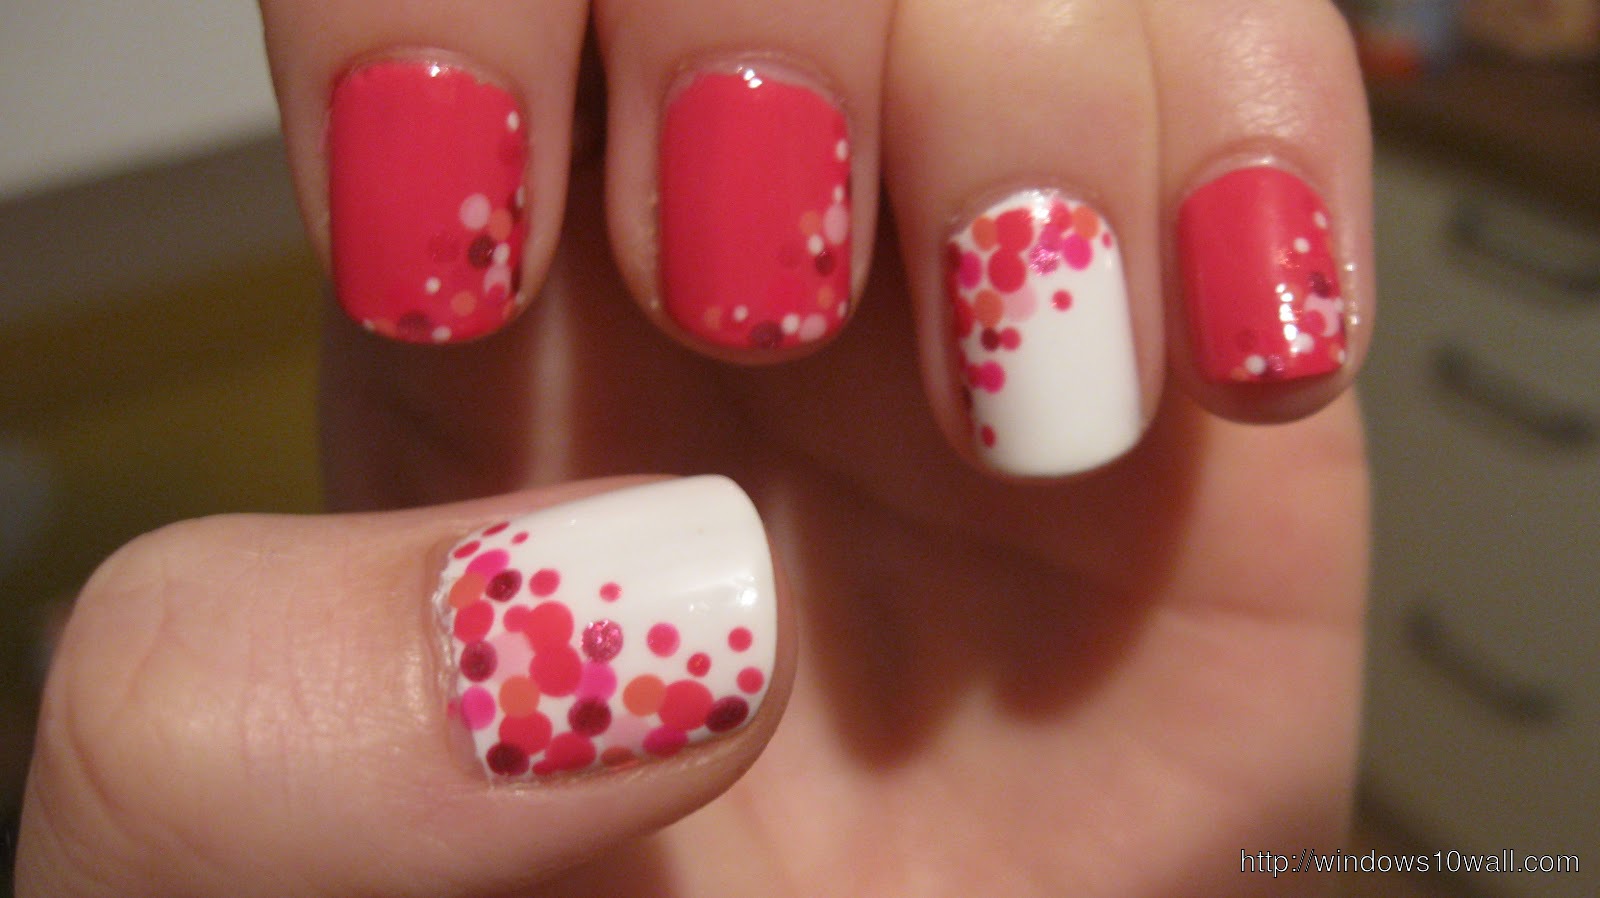 pink-nail-art-with-colorful-polkadots-background-wallpaper